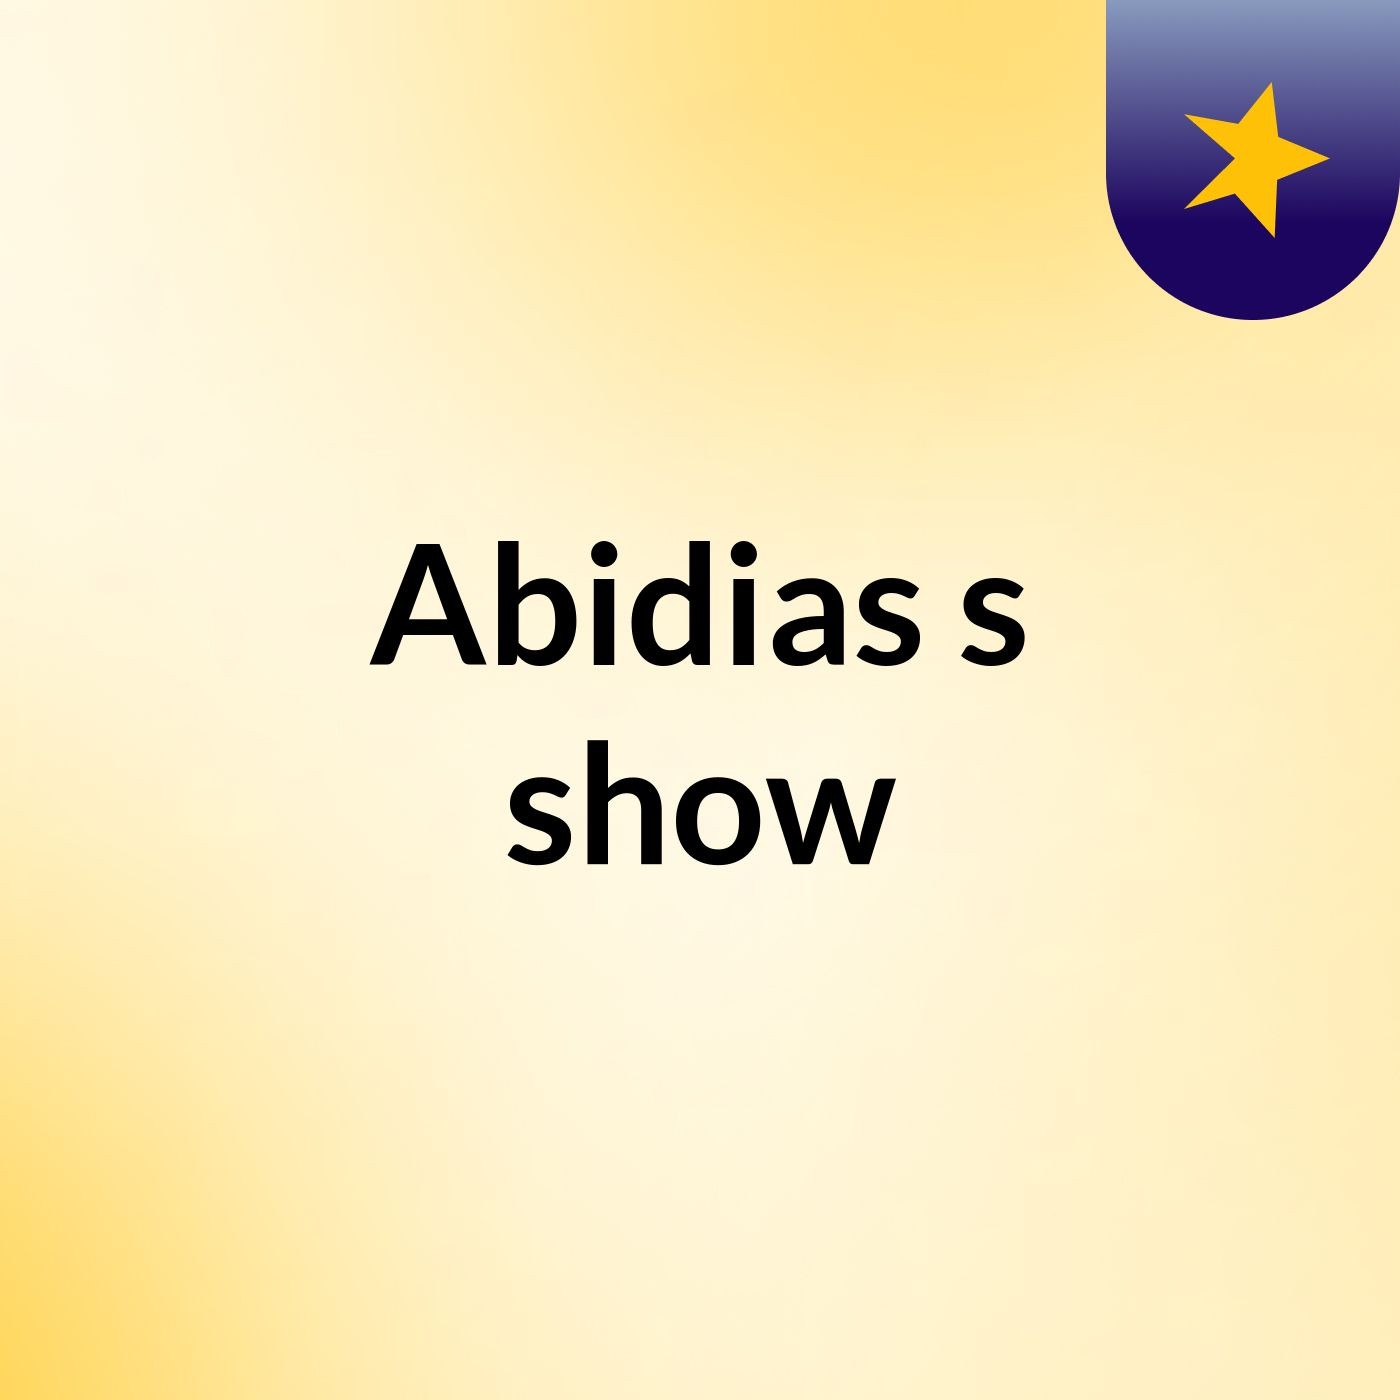 Abidias's show